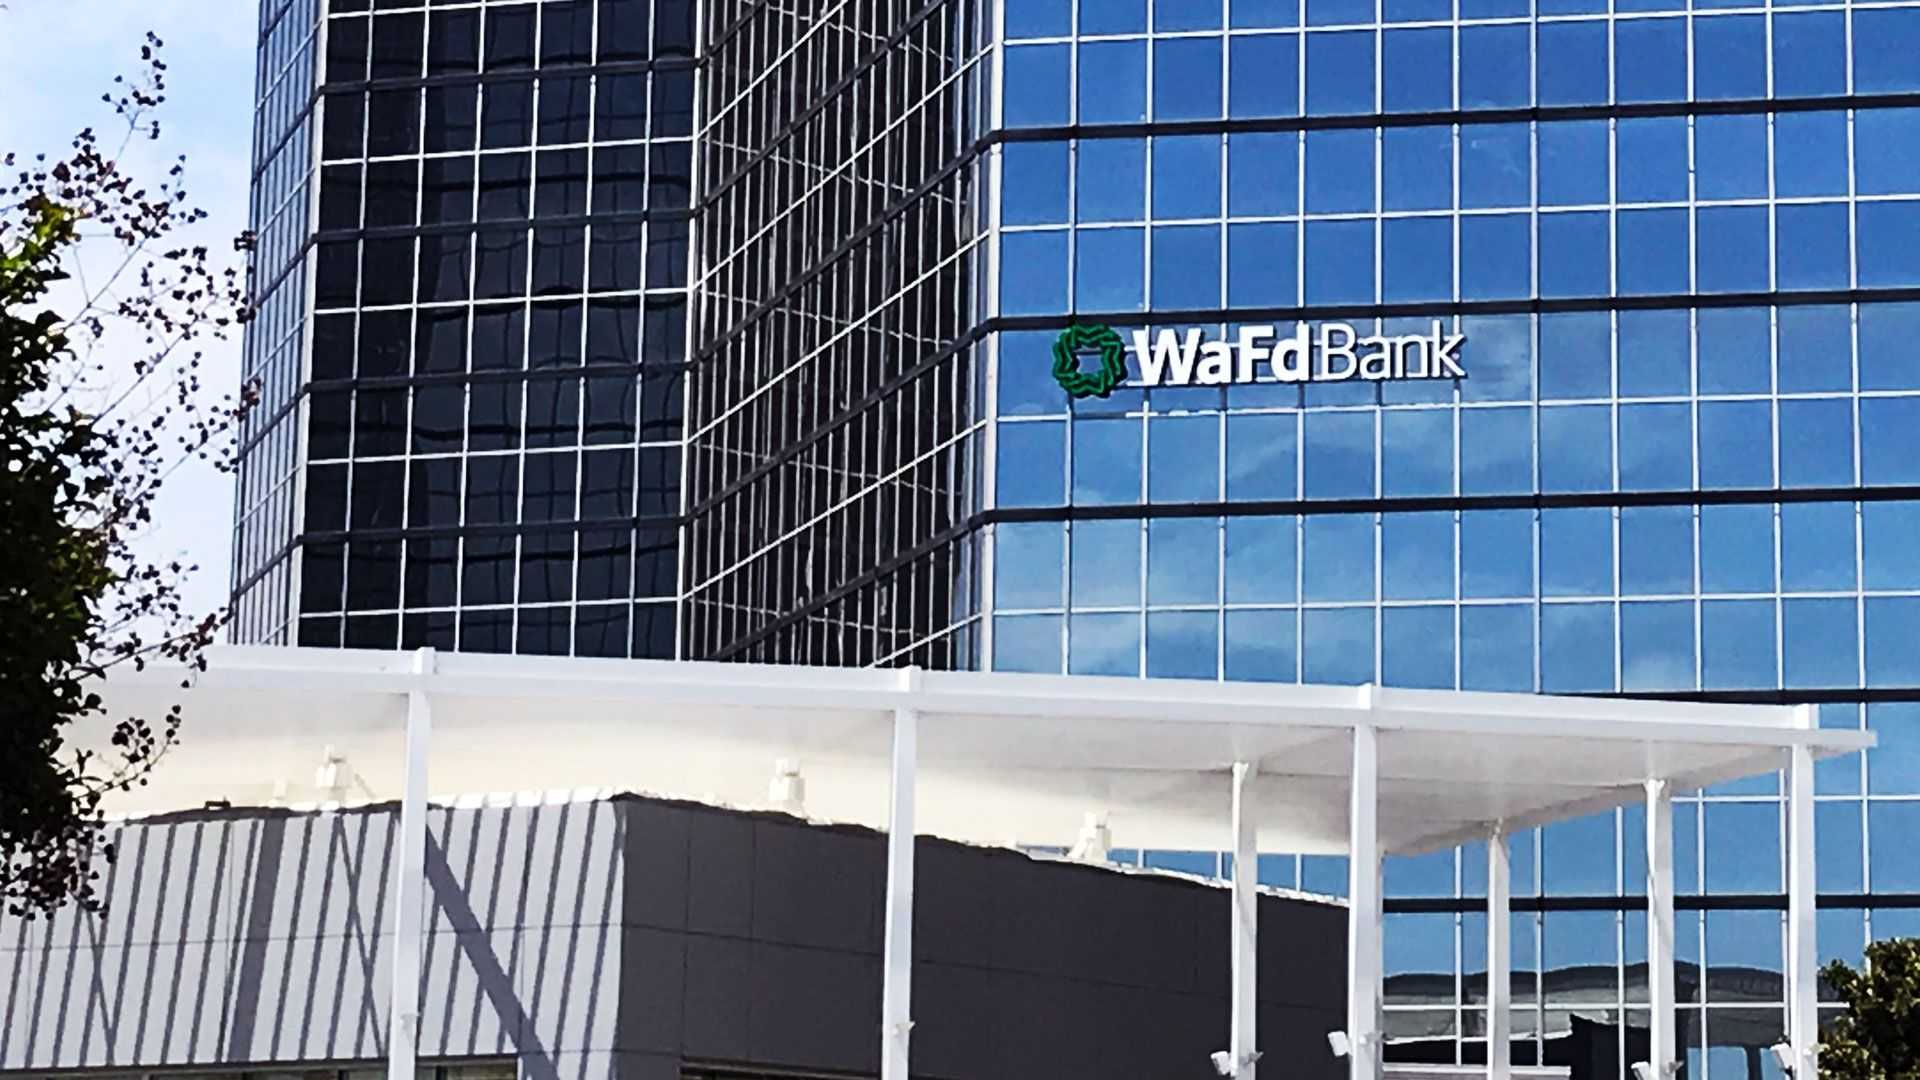 WaFd Bank in Dallas, Texas #1148 - Washington Federal.